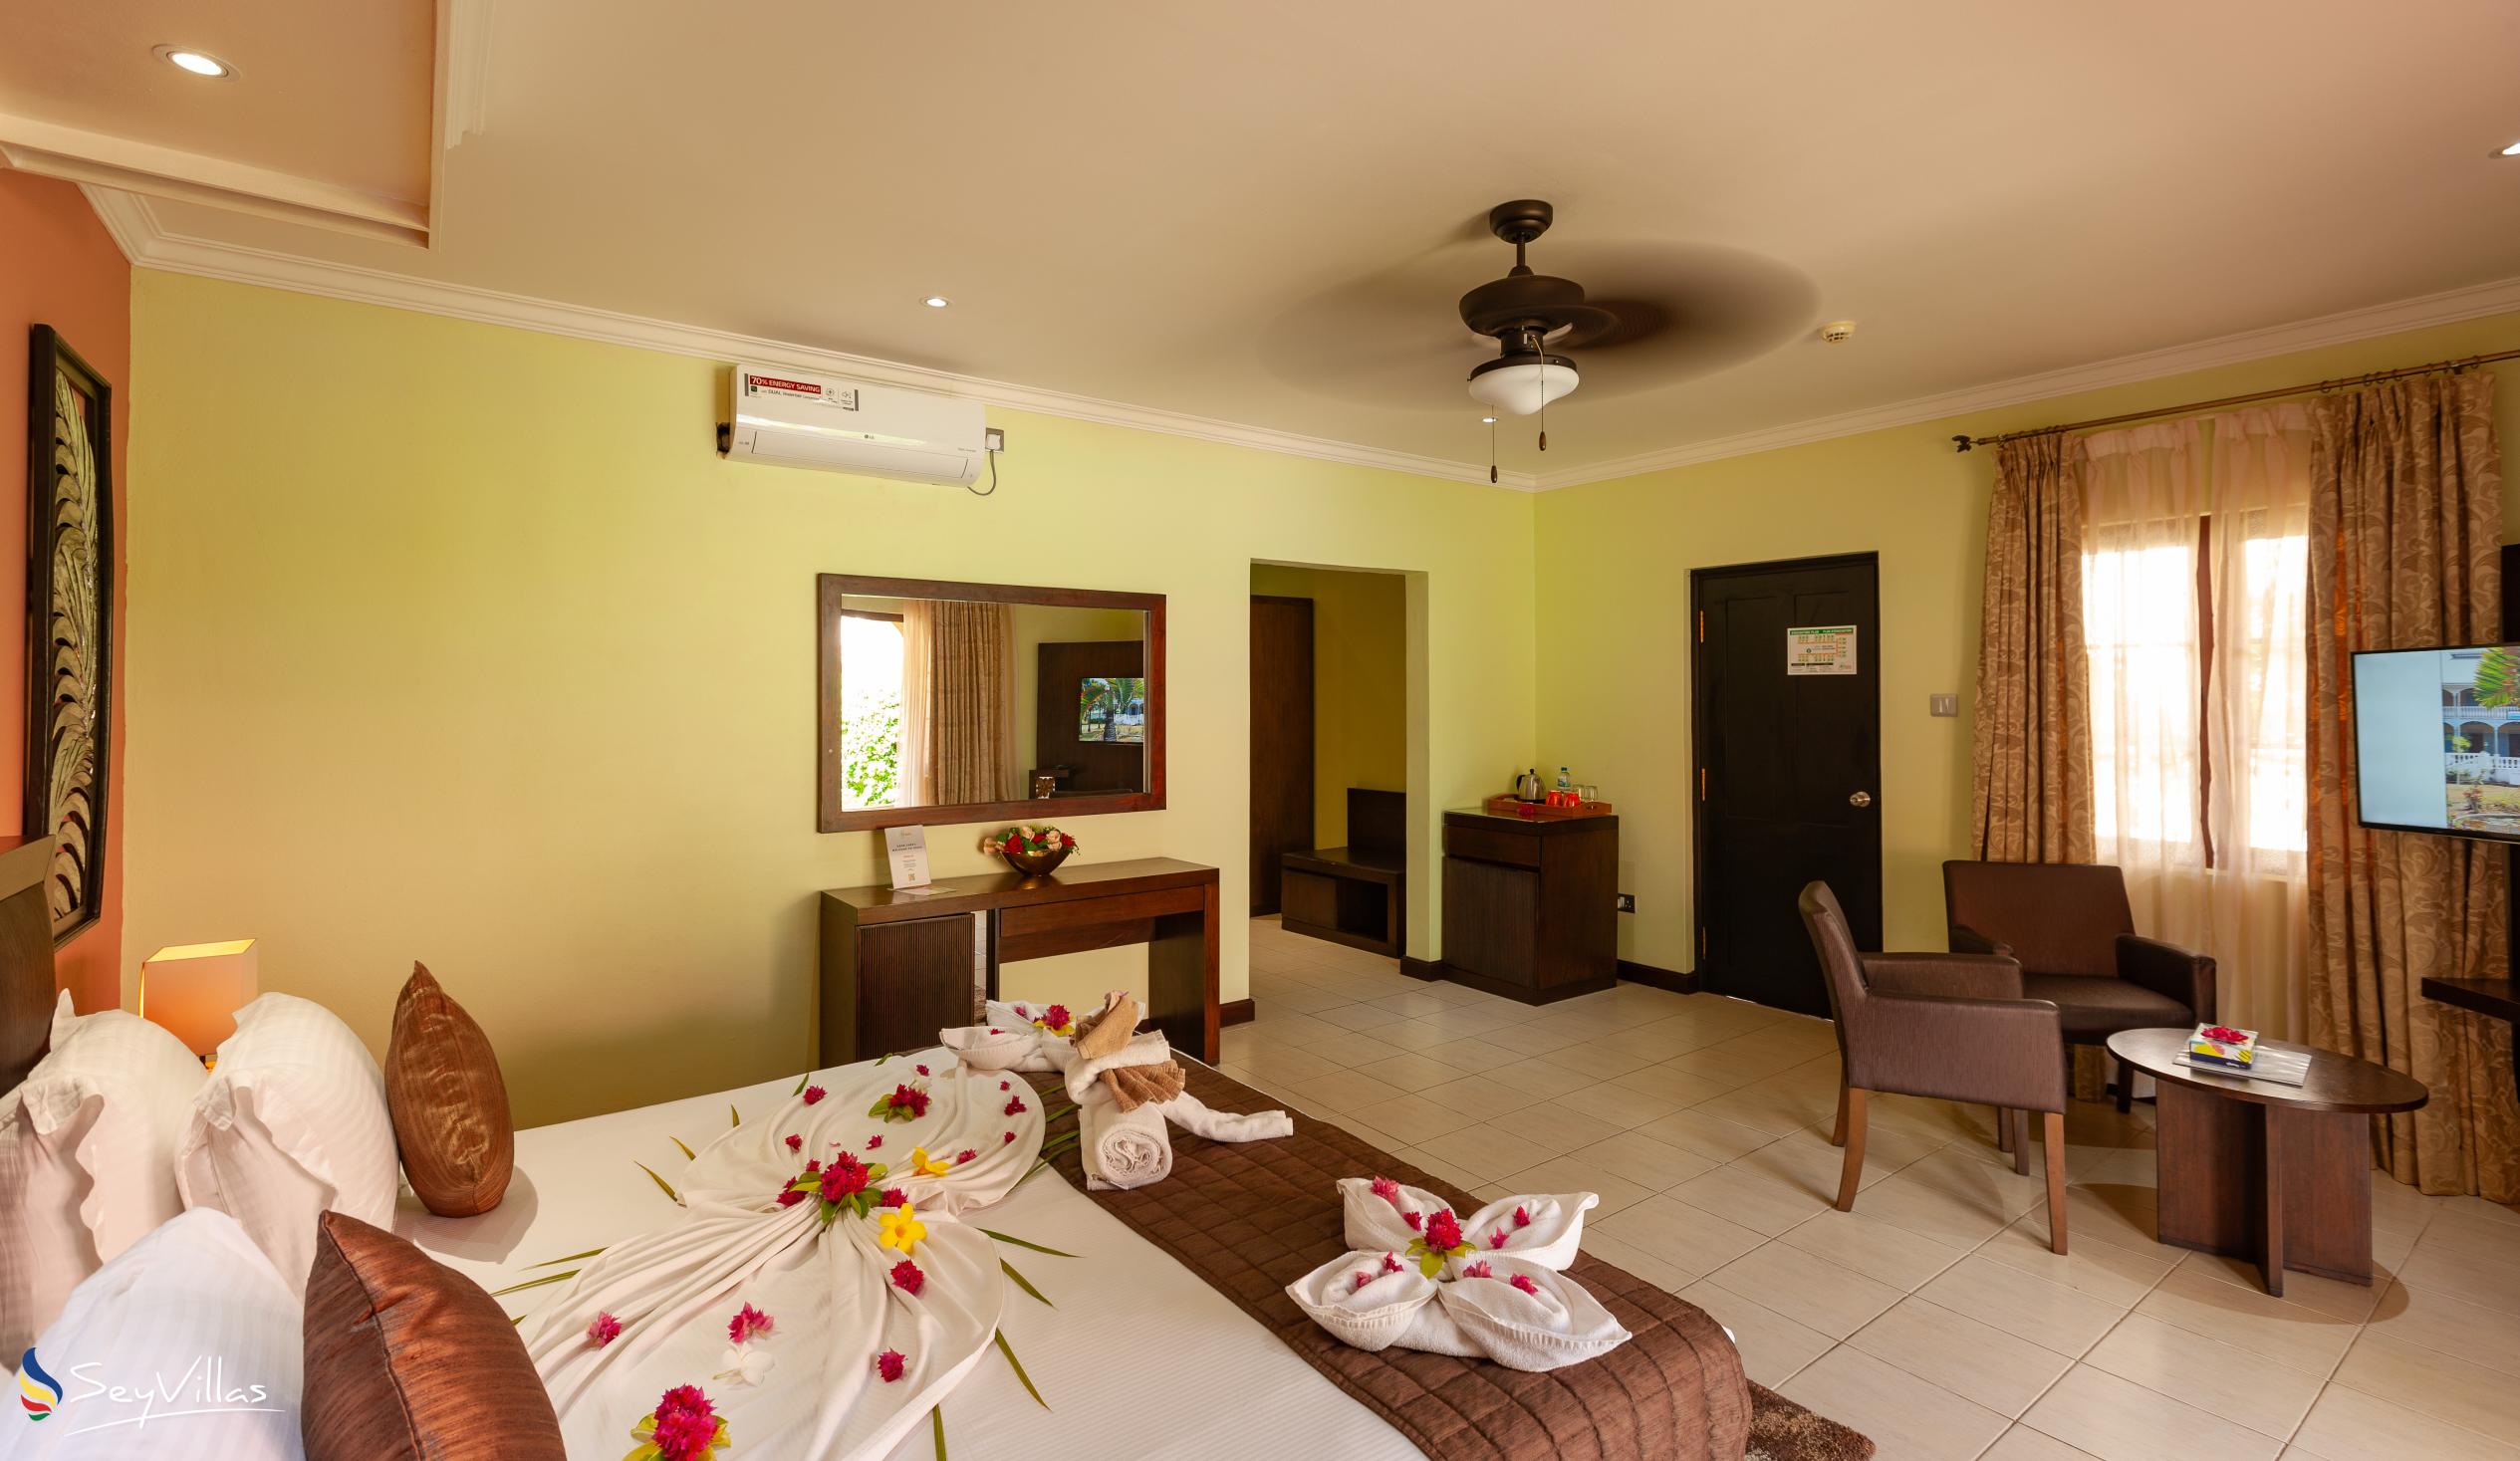 Photo 51: Oasis Hotel, Restaurant & Spa - Superior Room - Praslin (Seychelles)